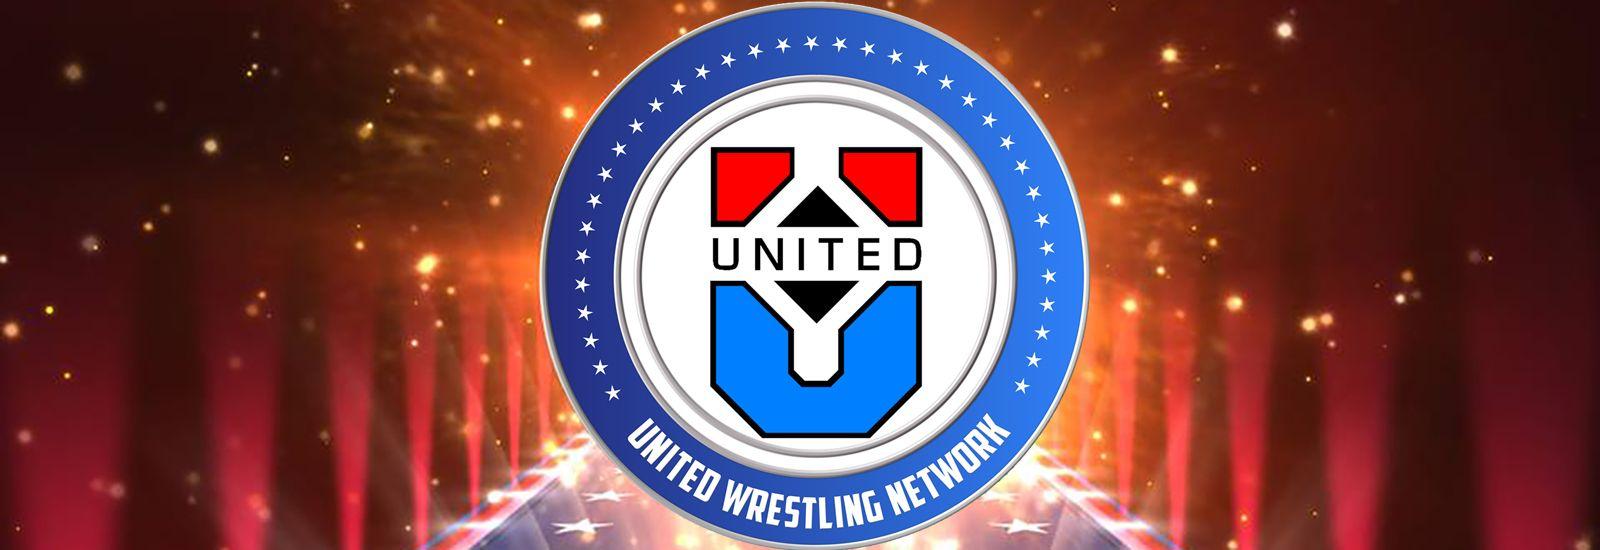 United Wrestling Logo - United Wrestling Network. Not your parents alliance